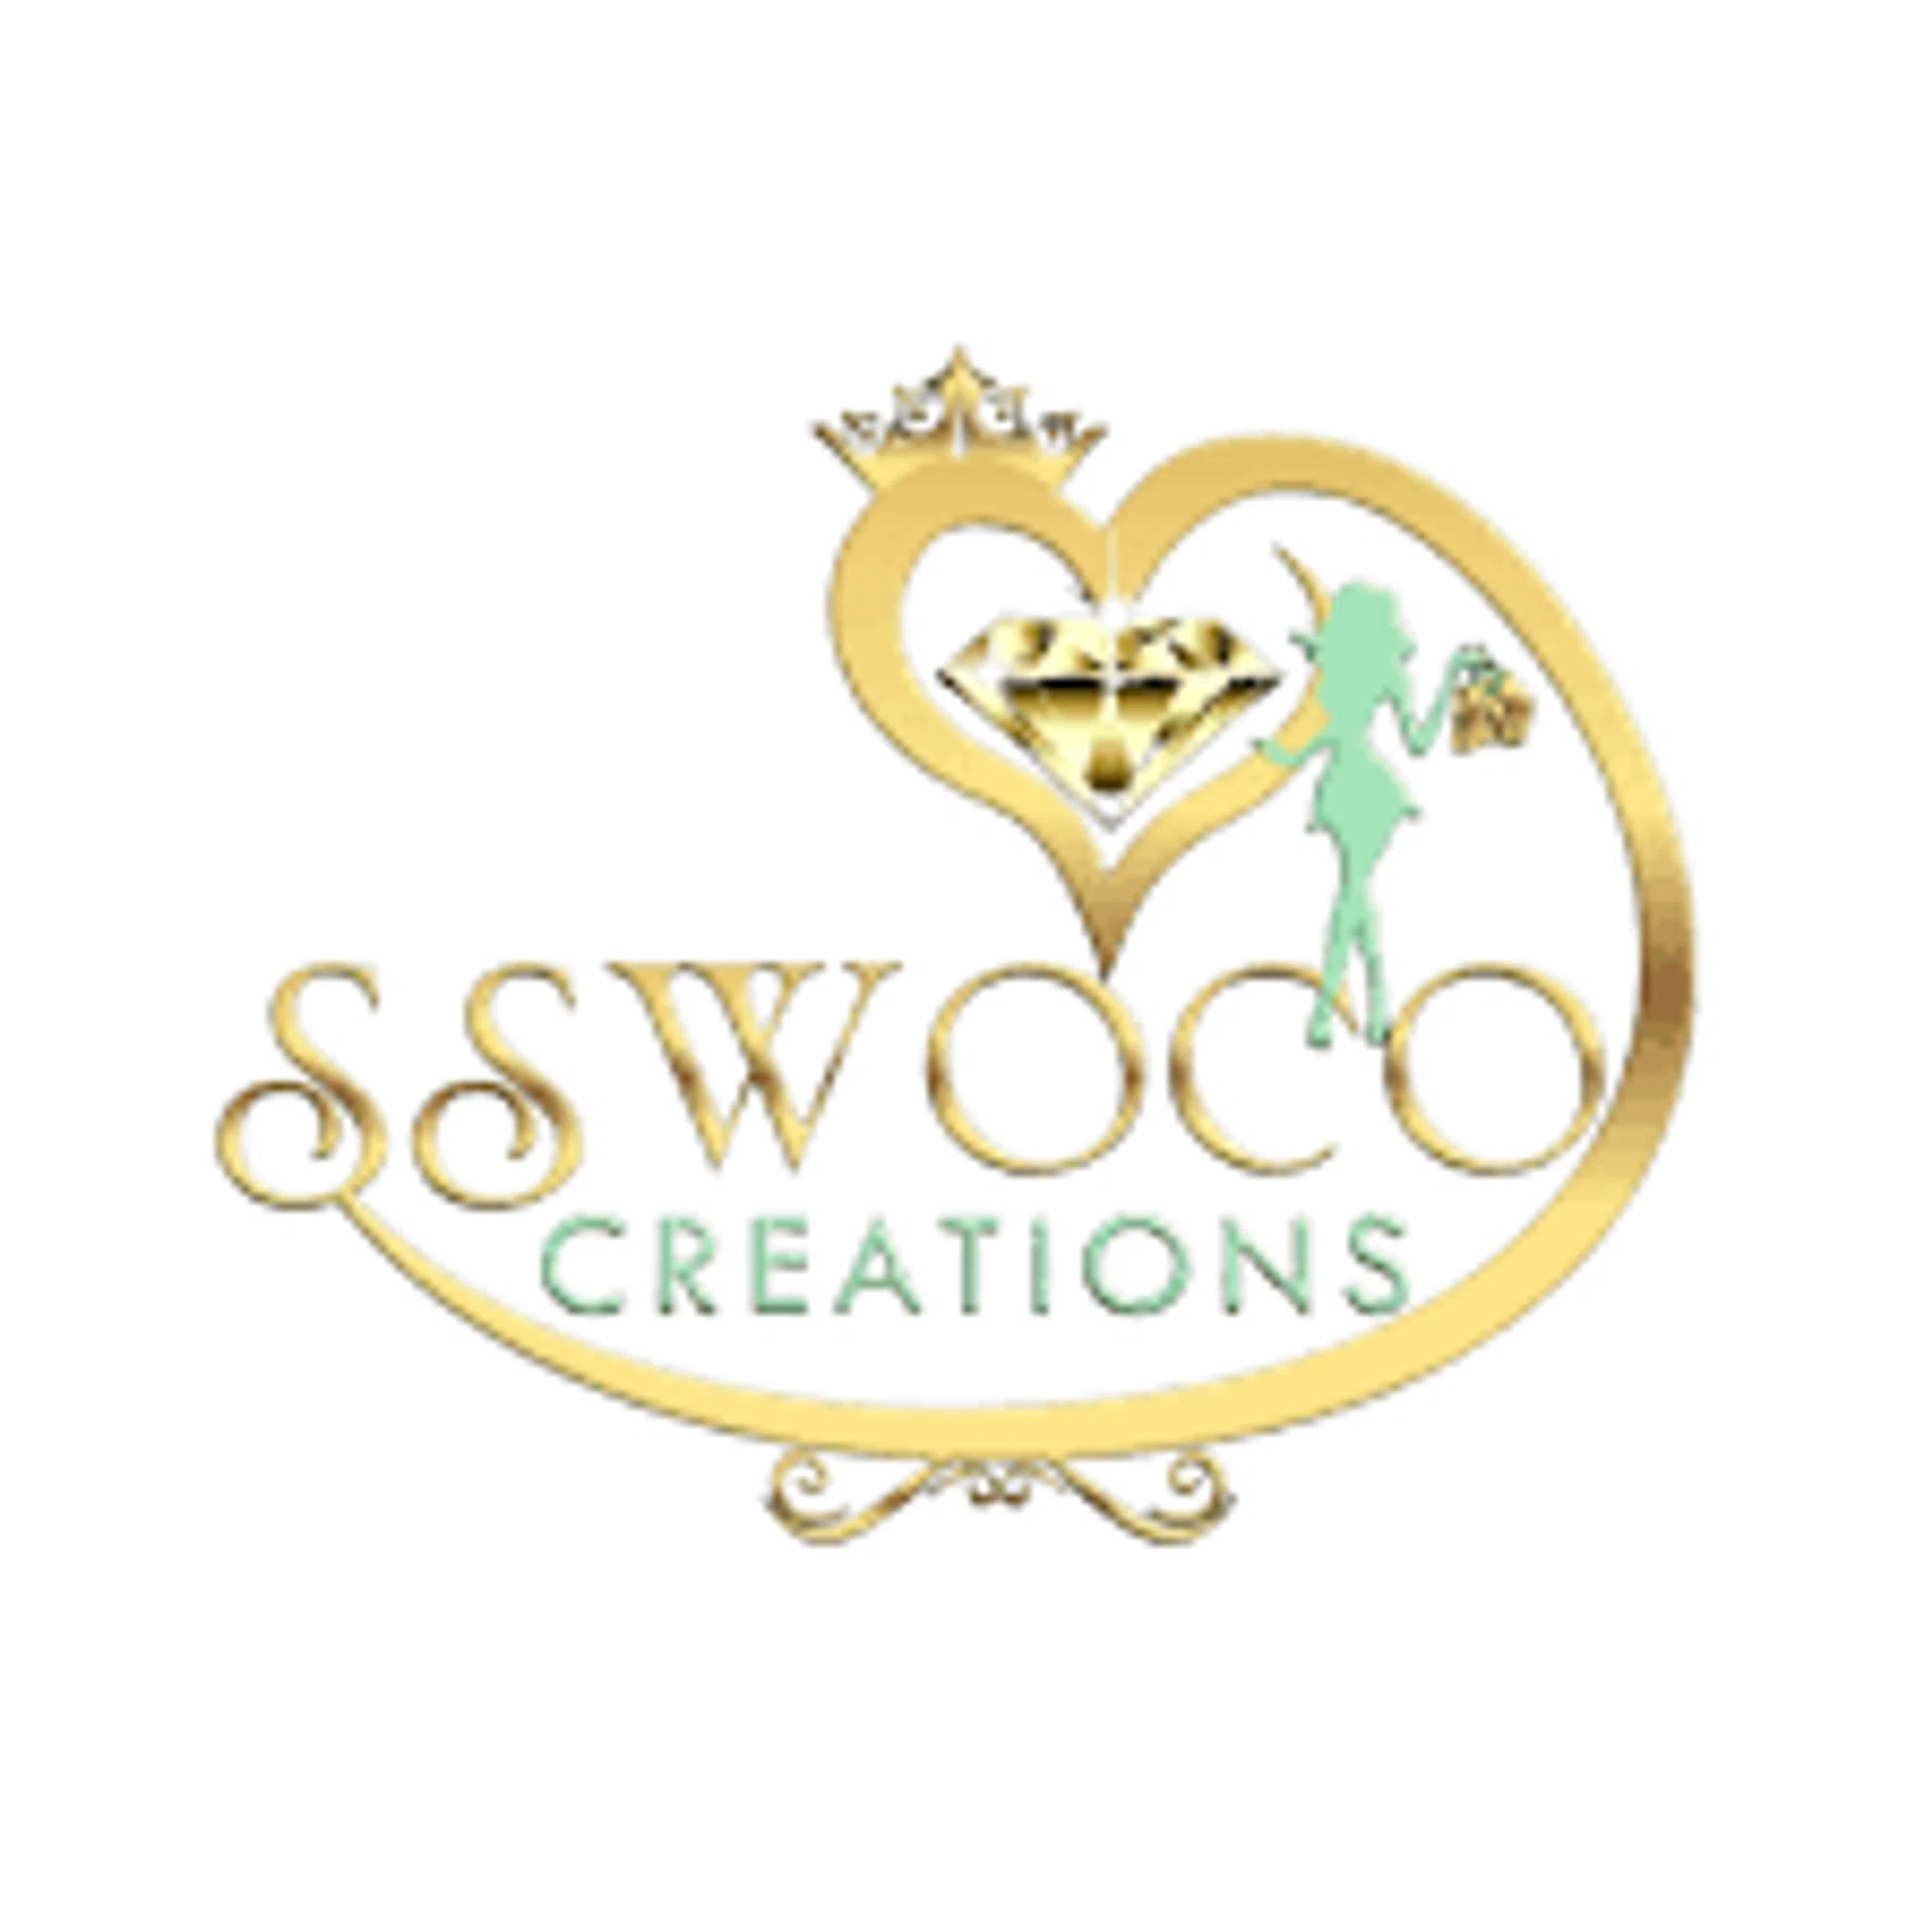 SSWOCO Creations